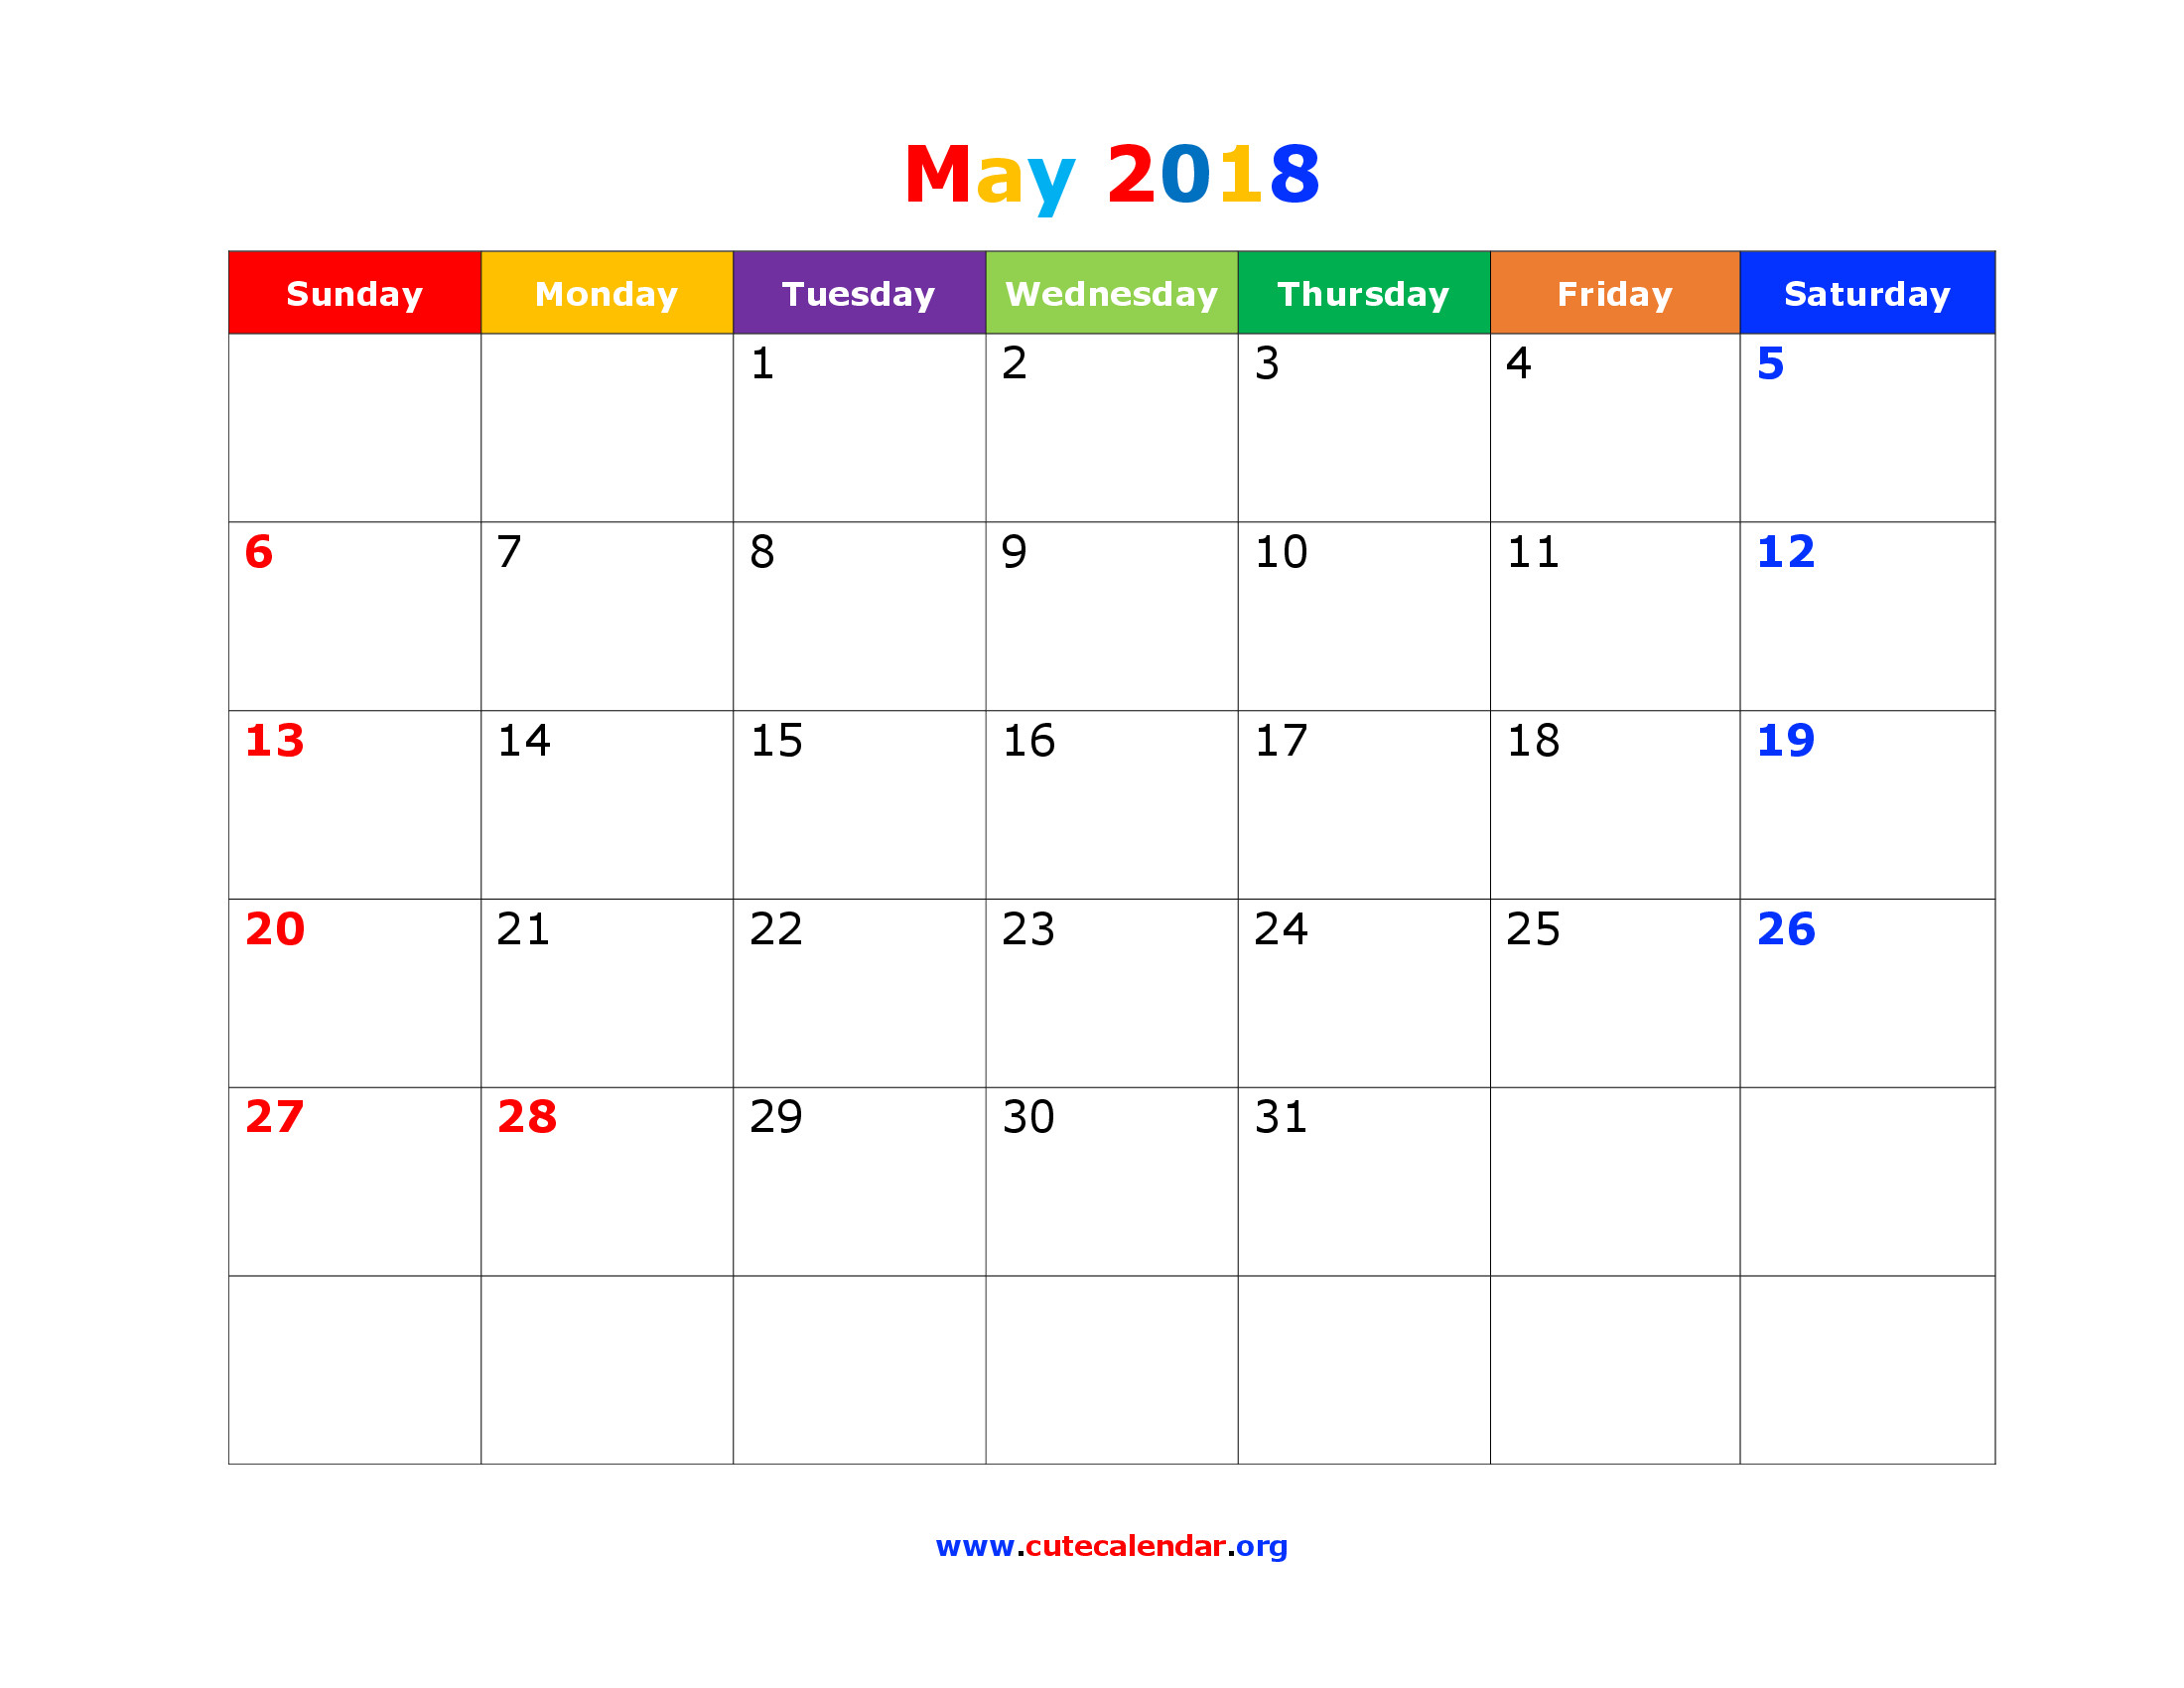 may-2018-desktop-calendar-wallpaper-60-images